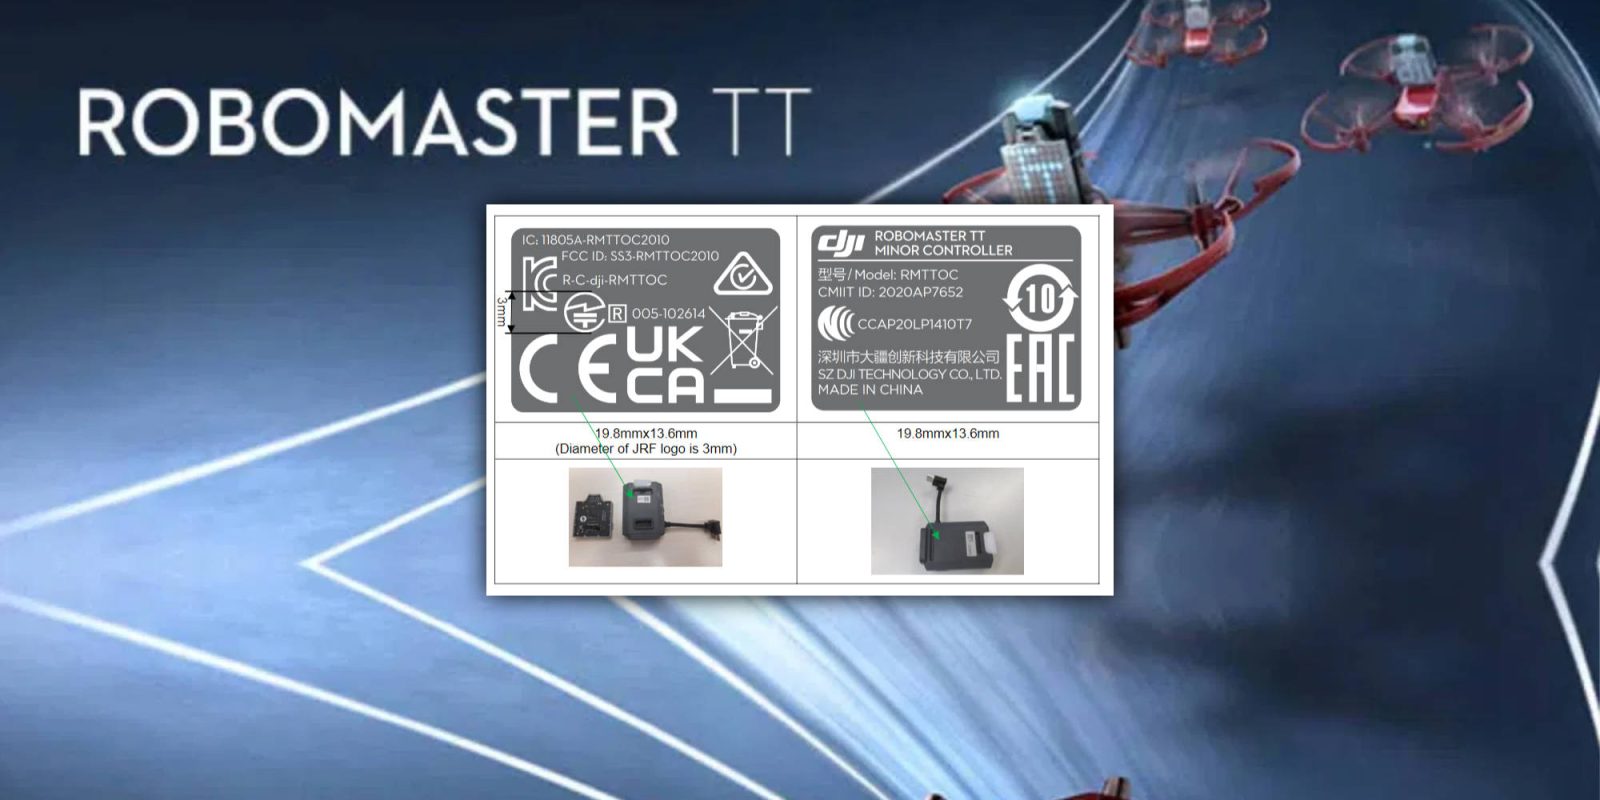 DJI's RoboMaster TT launch U.S.